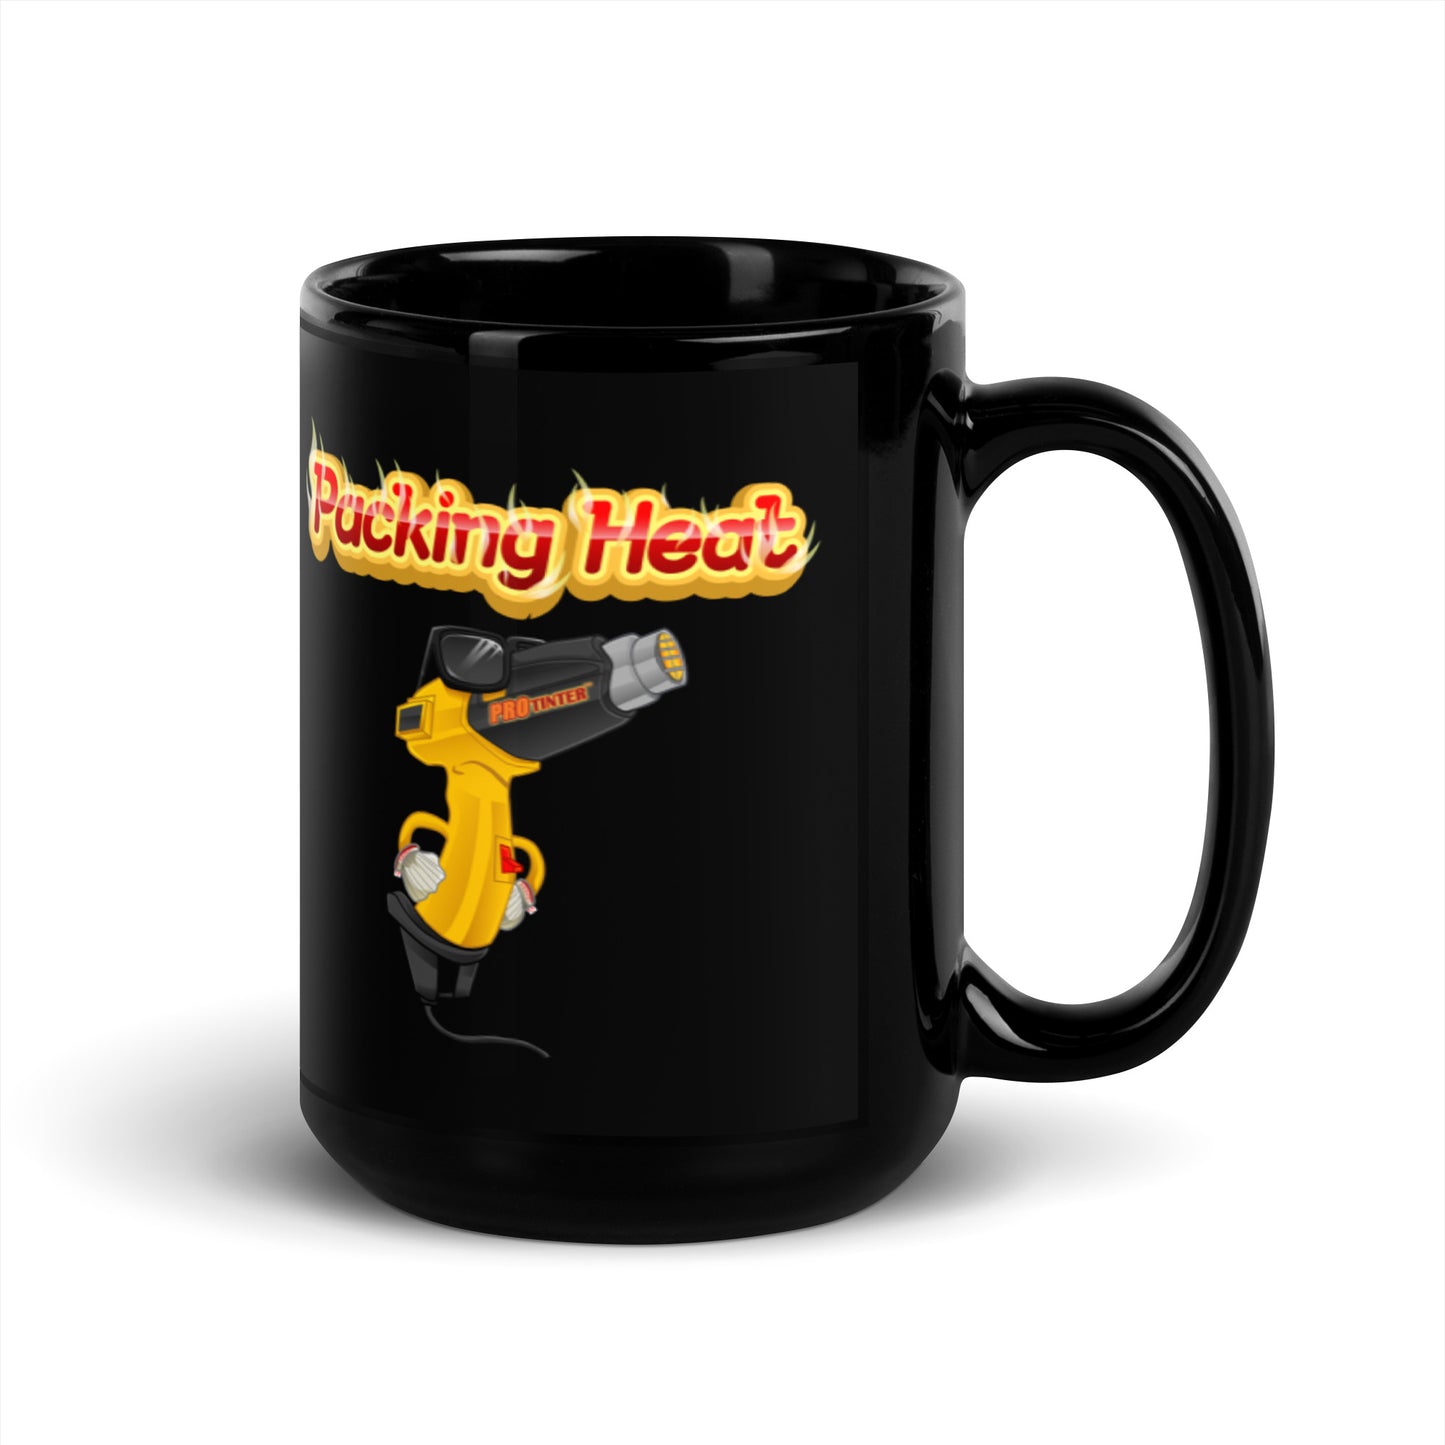 Packing Heat Coffee Mug